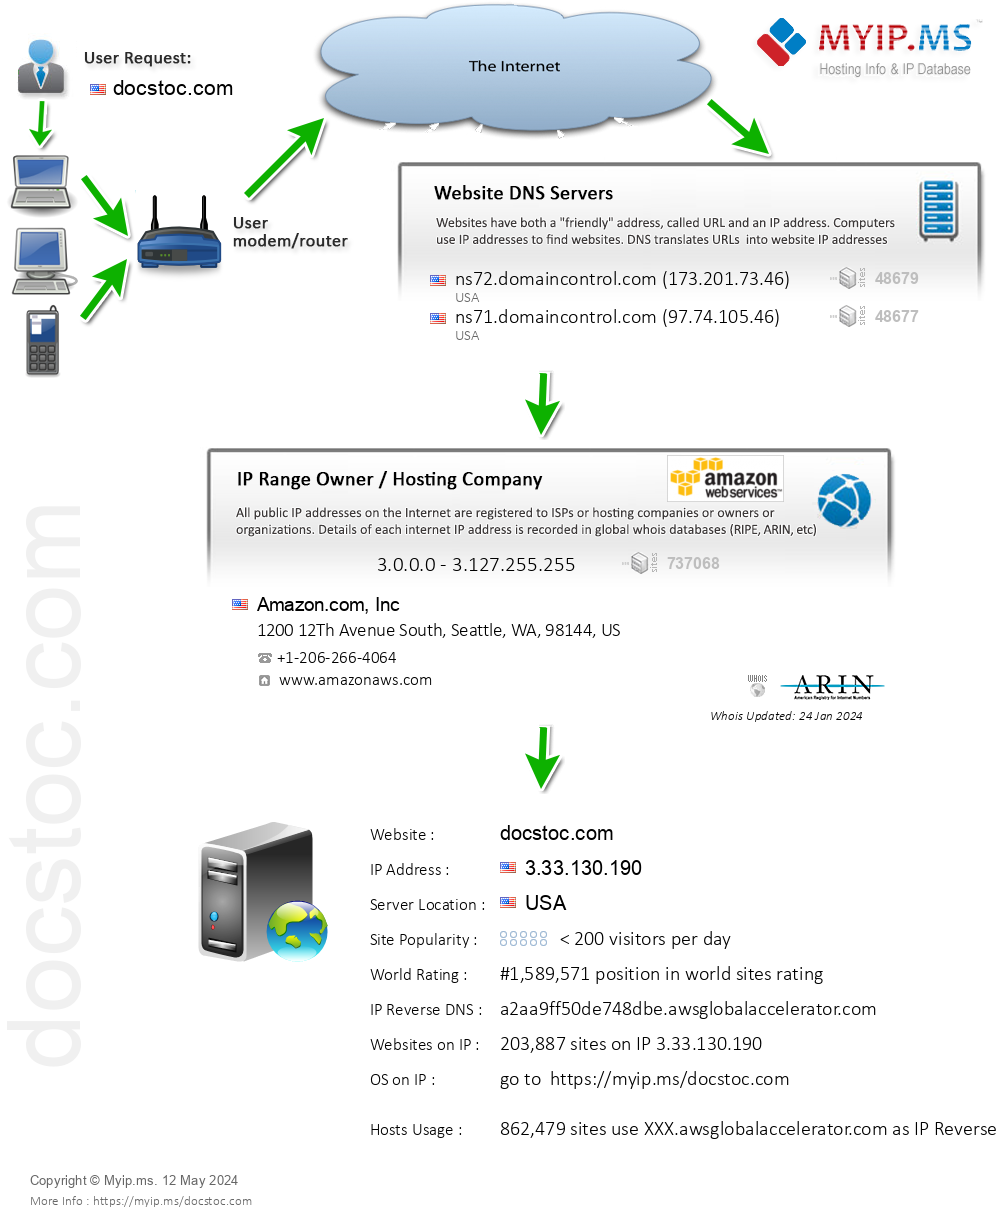 Docstoc.com - Website Hosting Visual IP Diagram